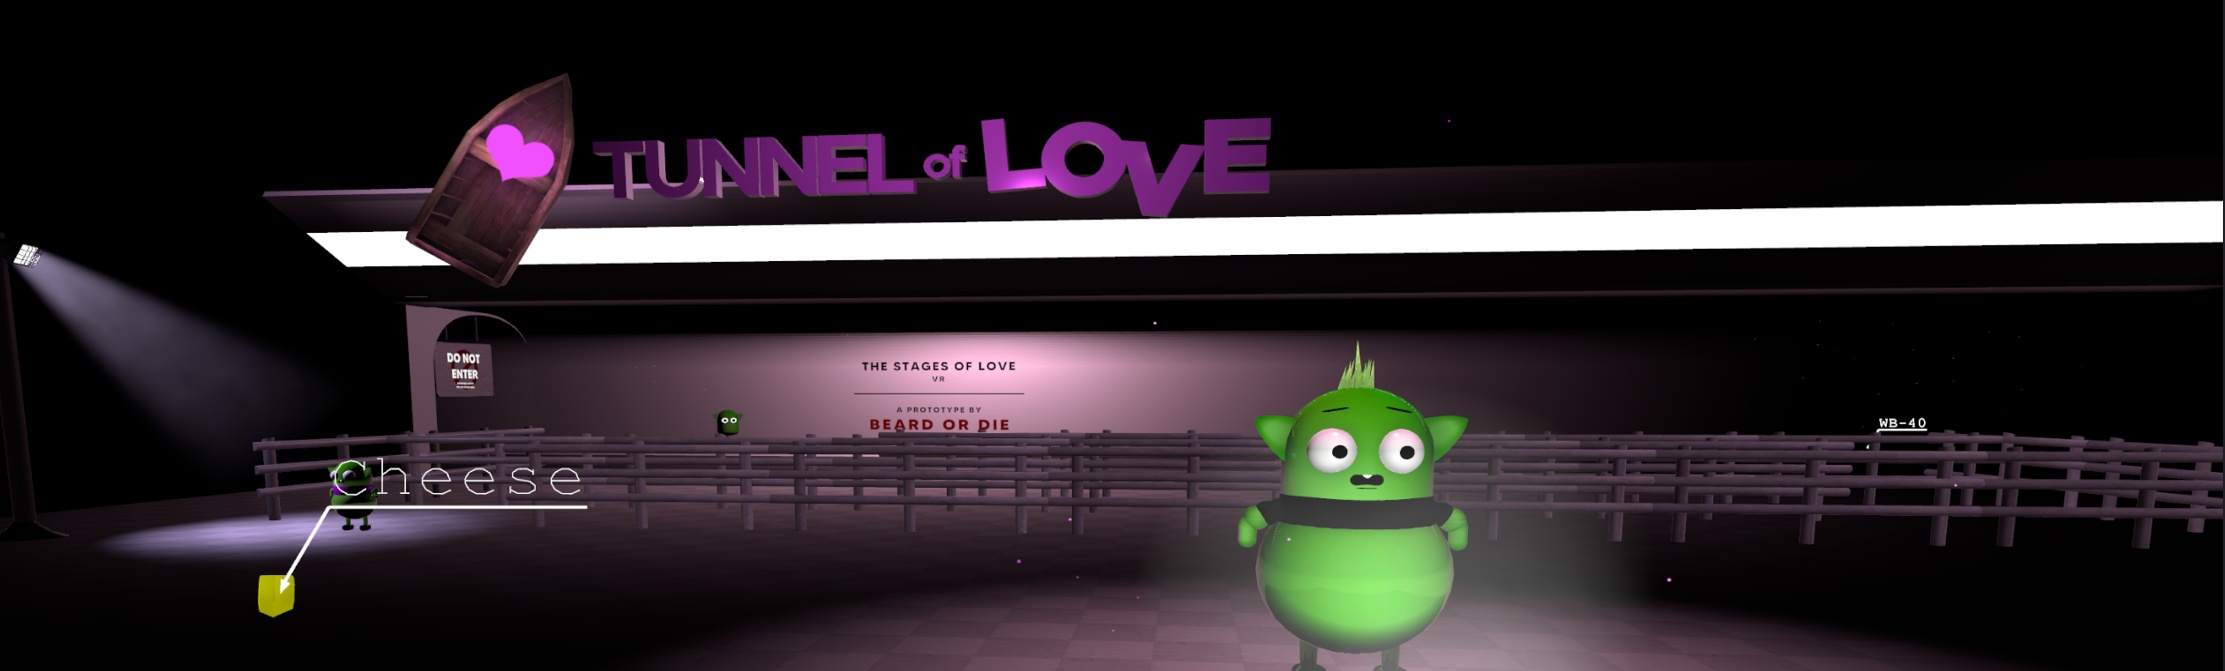 Tunnel of Love VR